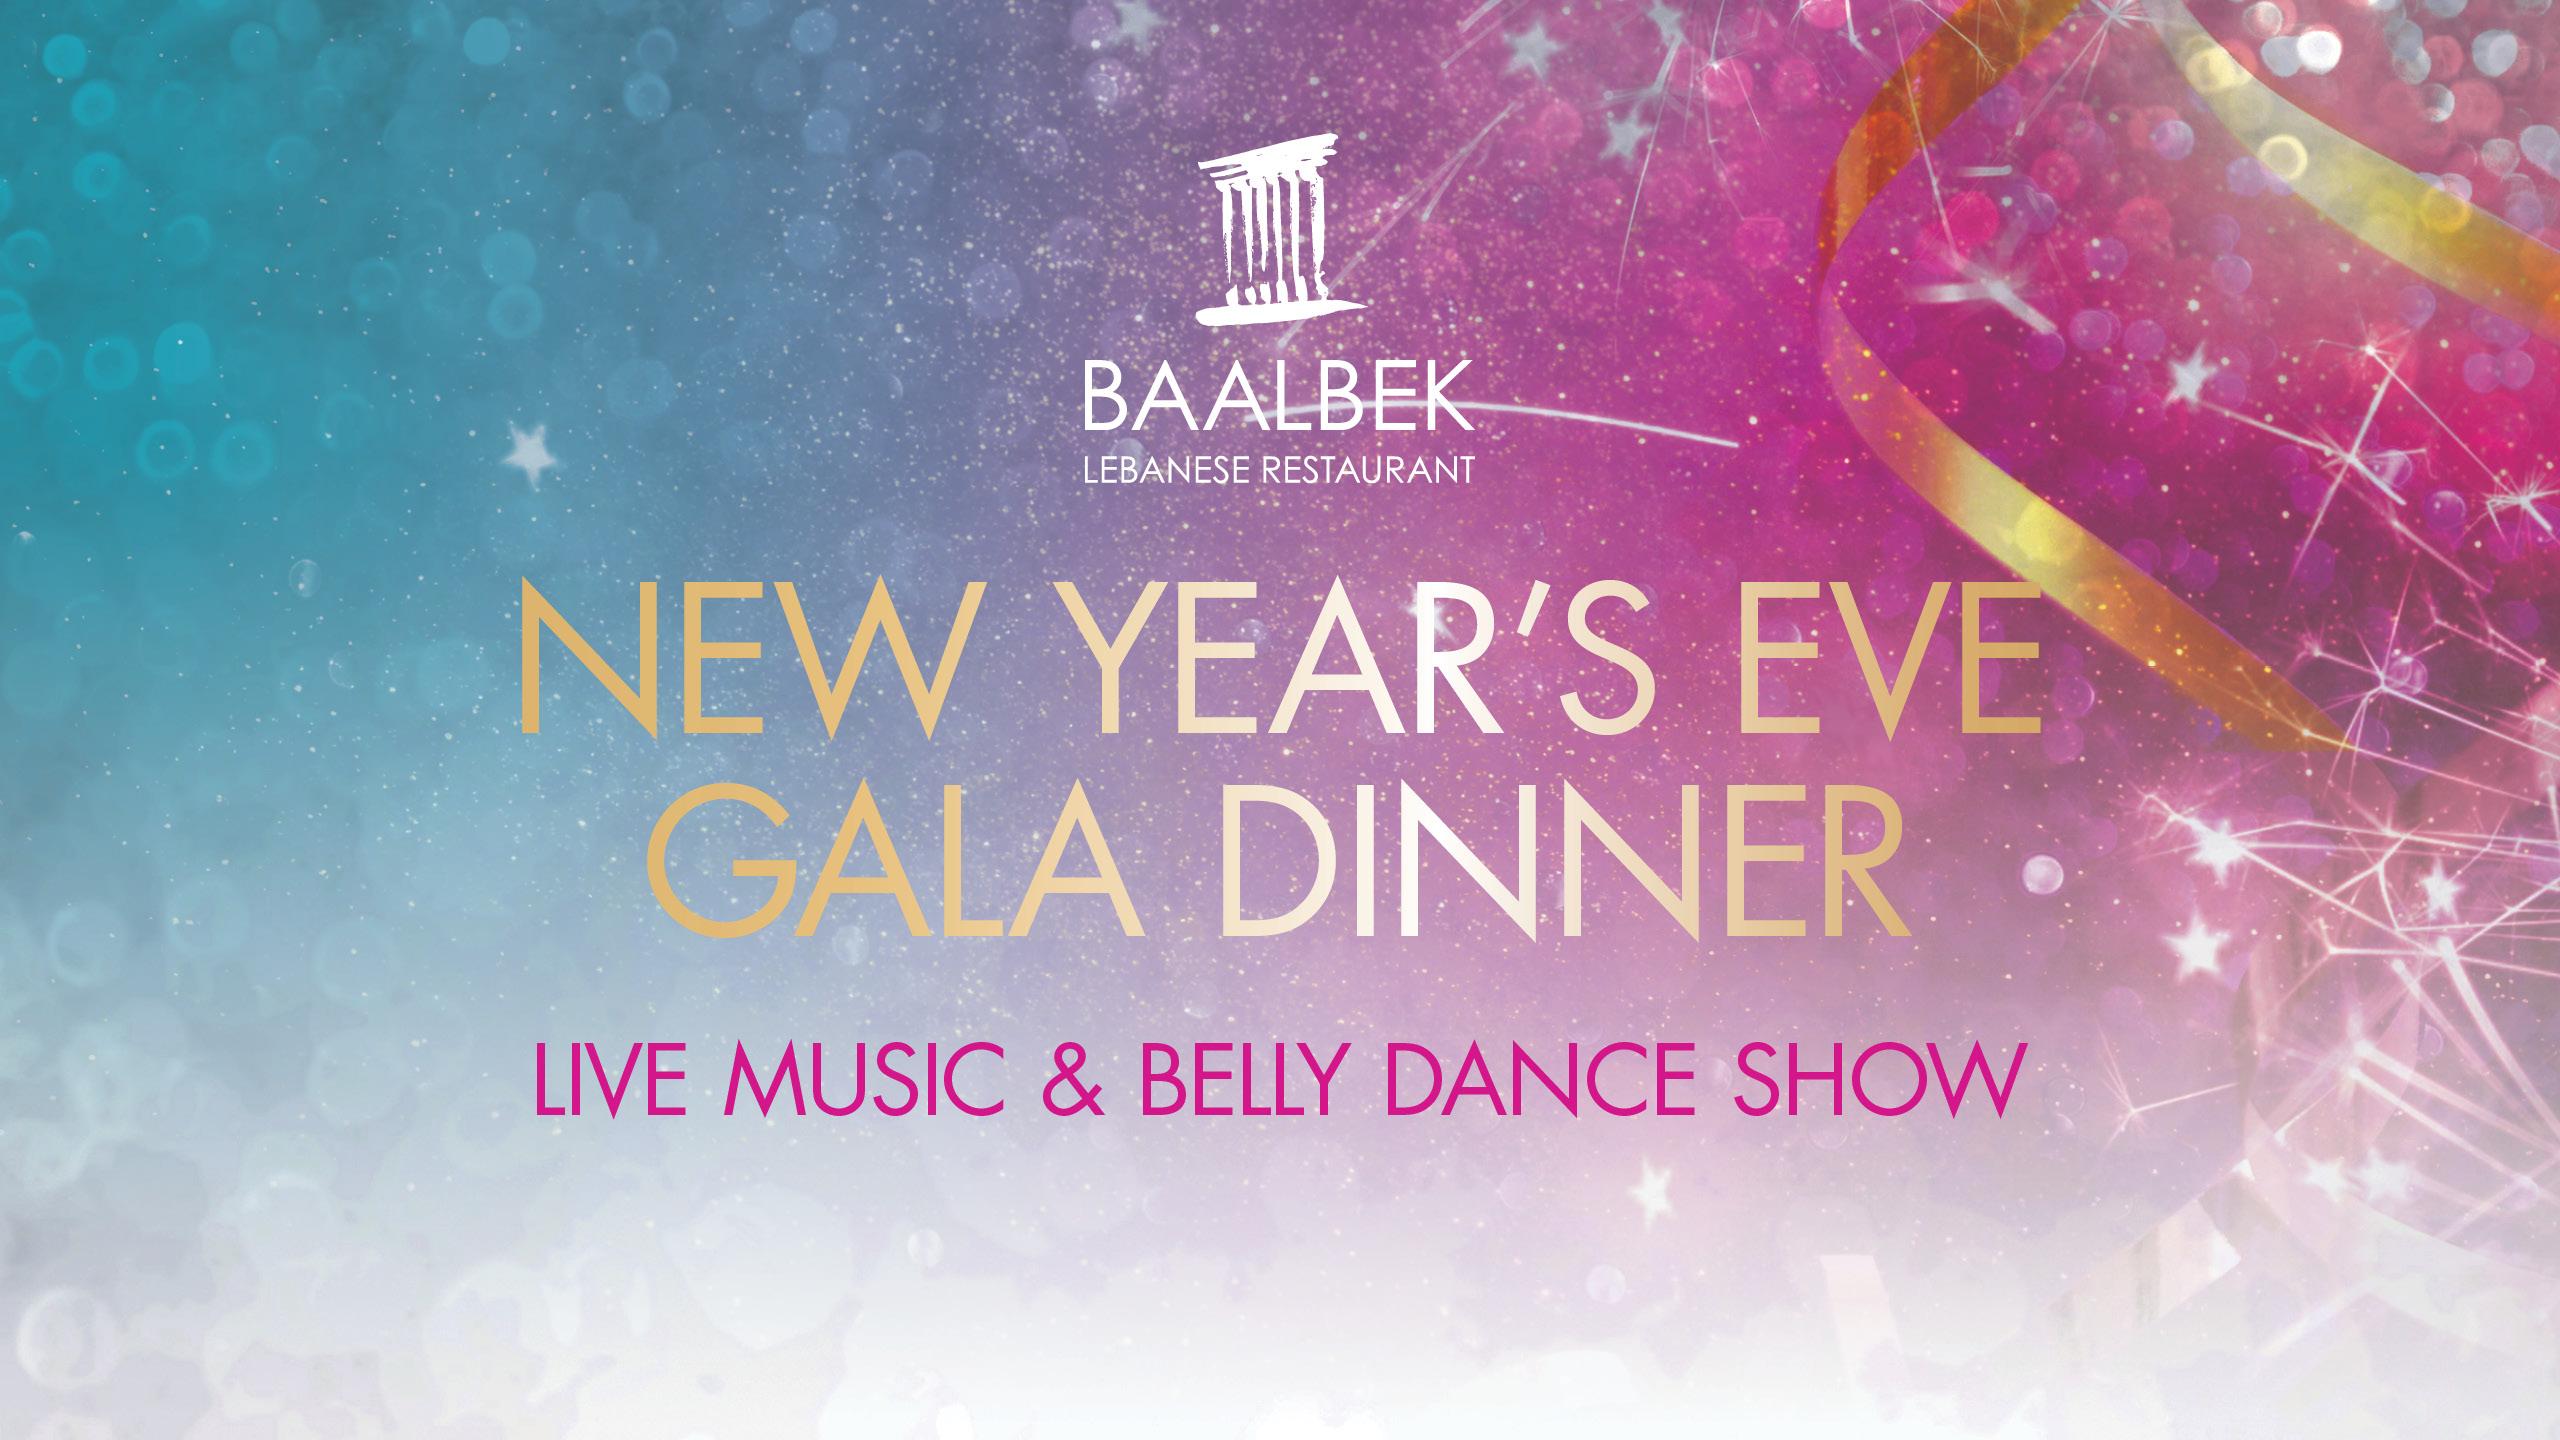 New Year’s Eve Gala Dinner At Baalbek